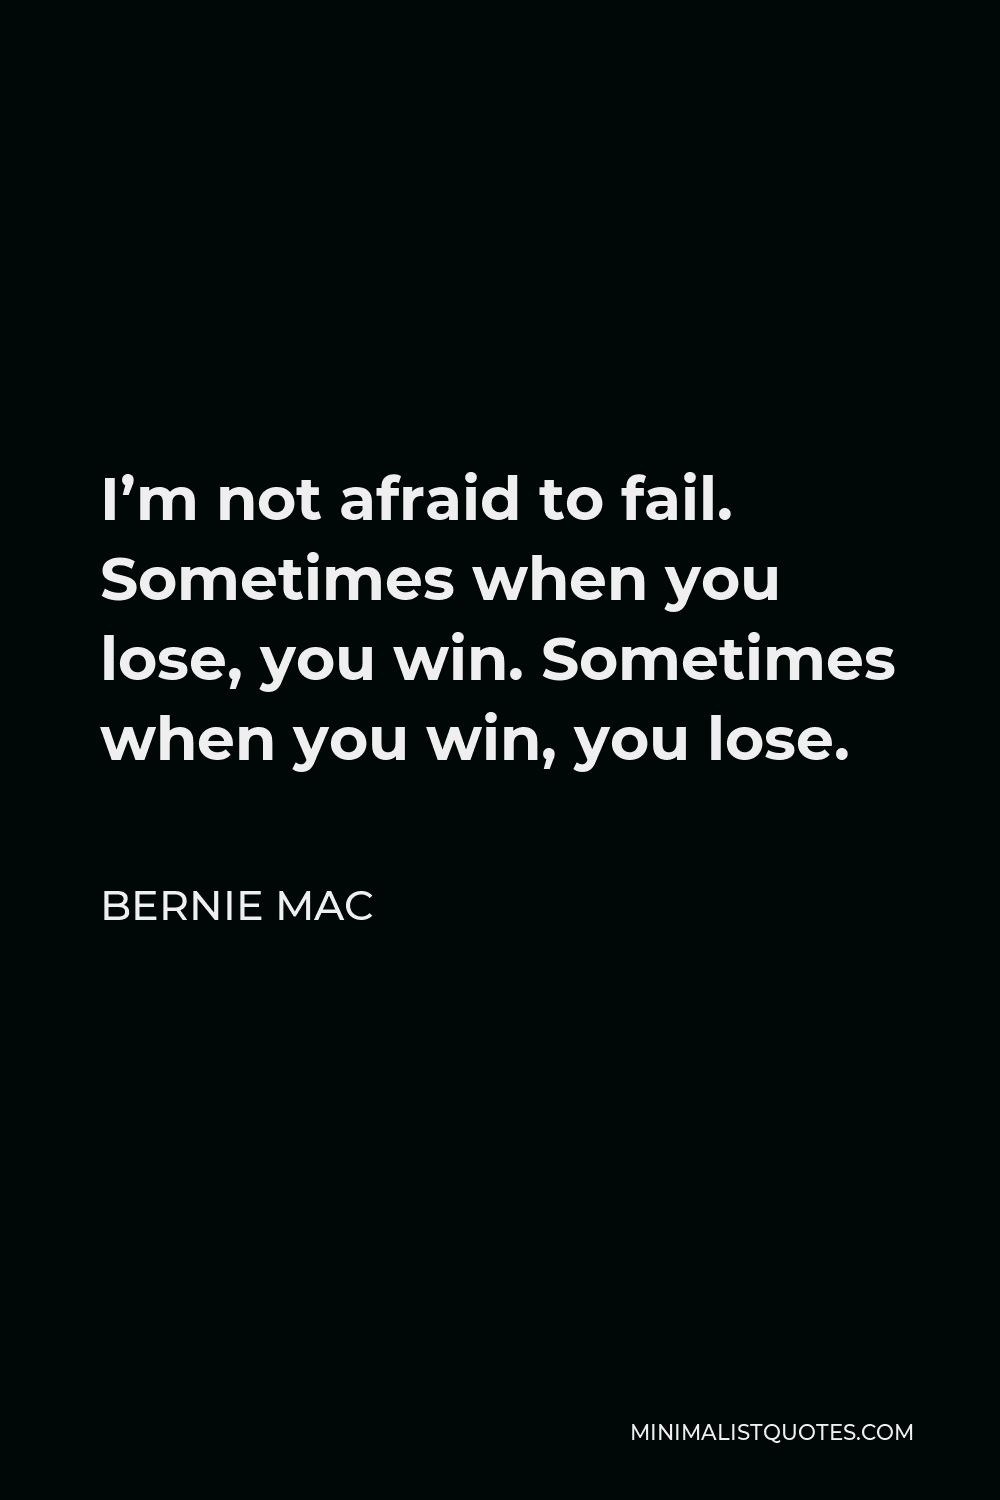 Bernie Mac Quote - I’m not afraid to fail. Sometimes when you lose, you win. Sometimes when you win, you lose.